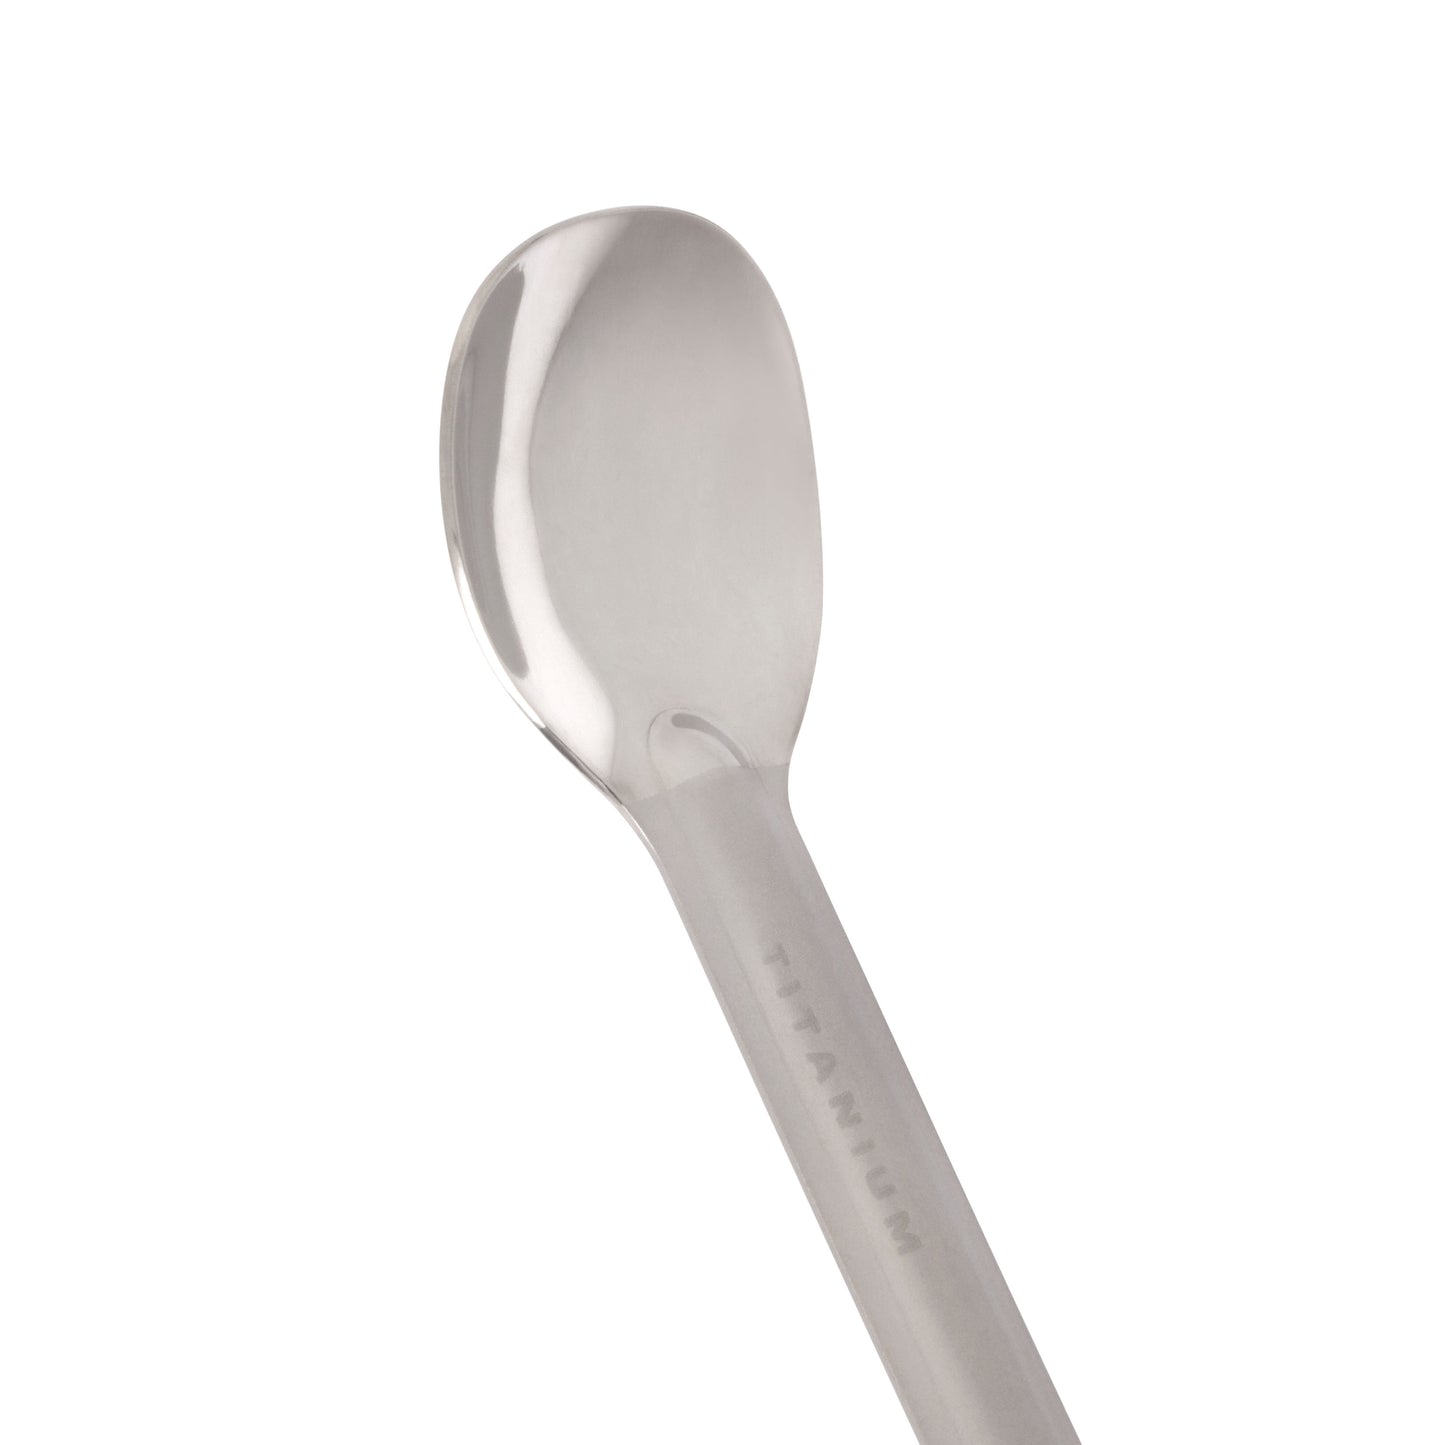 Titanium Long Handle Fork-n-Spoon closeup of the spoon